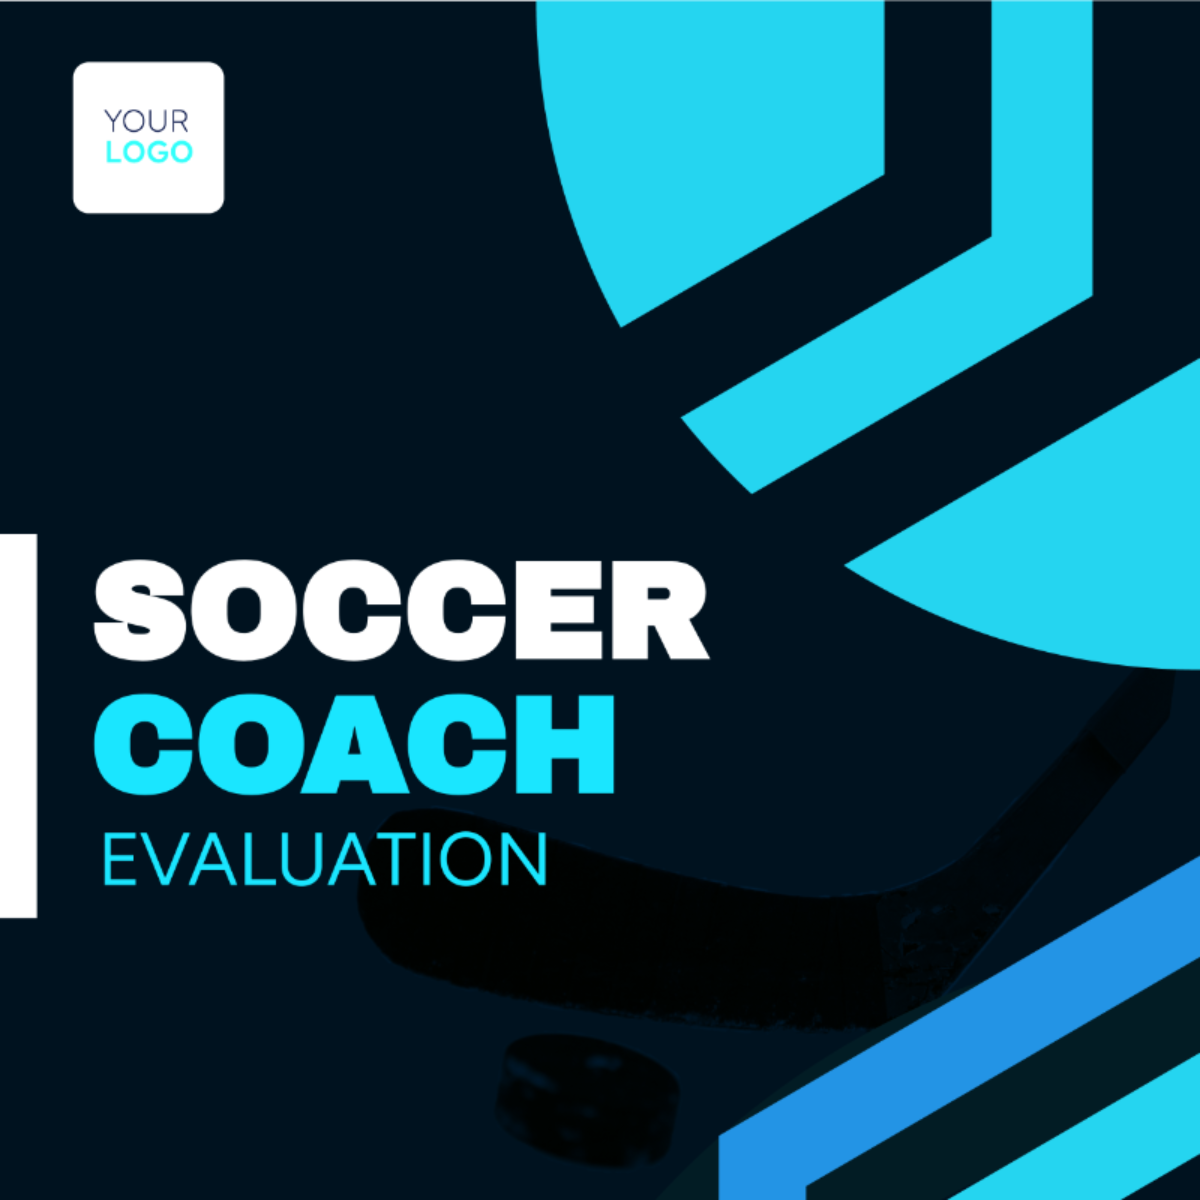 Soccer Coach Evaluation Template